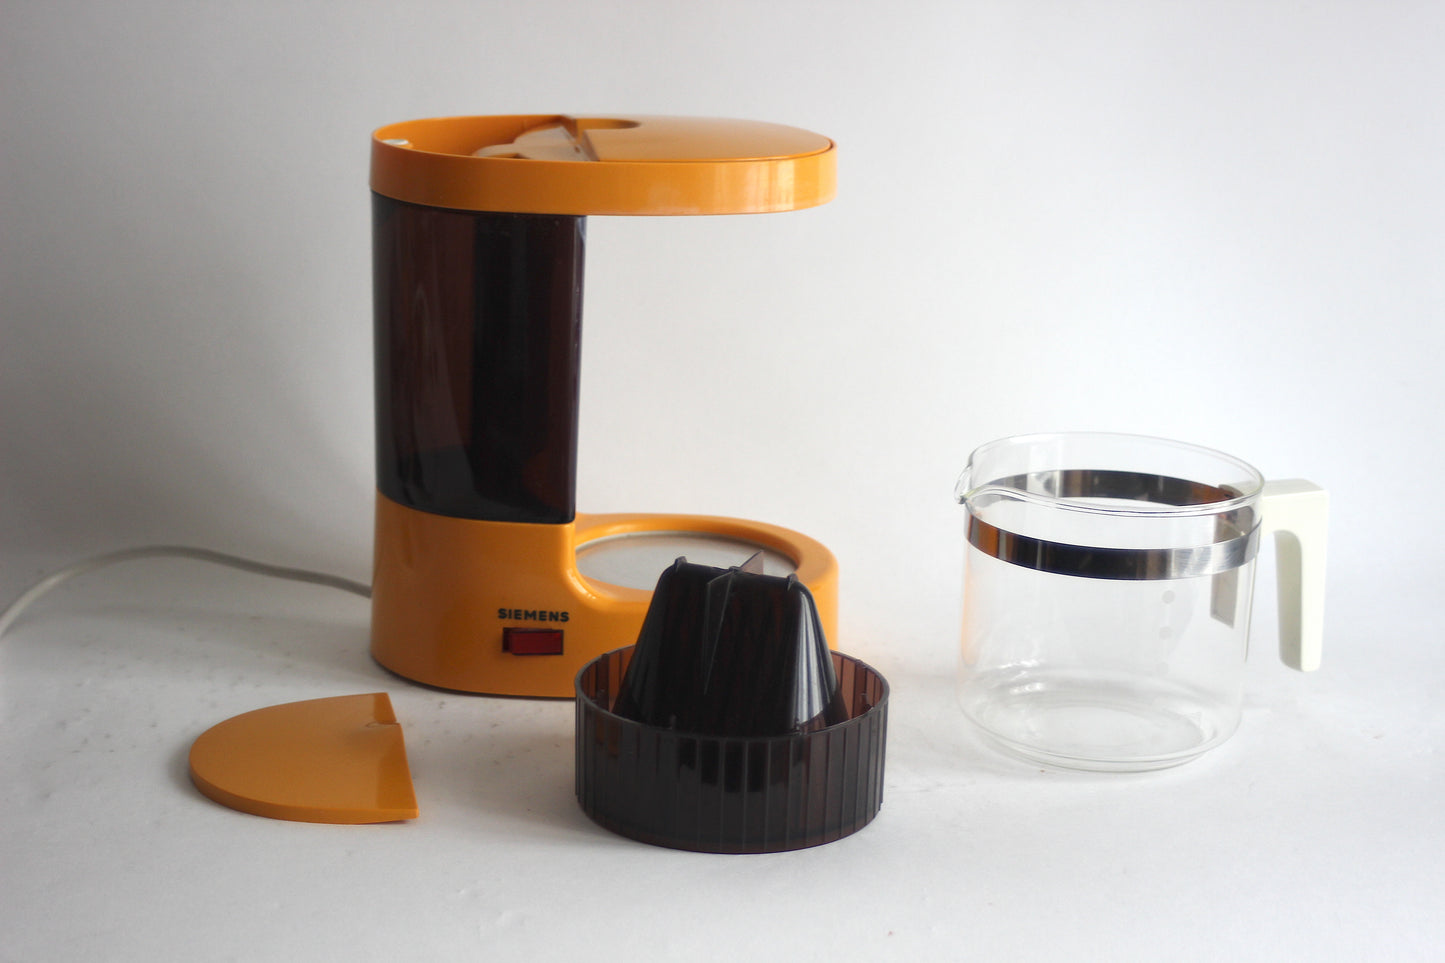 SIEMENS filter coffee maker TC 1103 Orange. Space age coffee maker. 70s